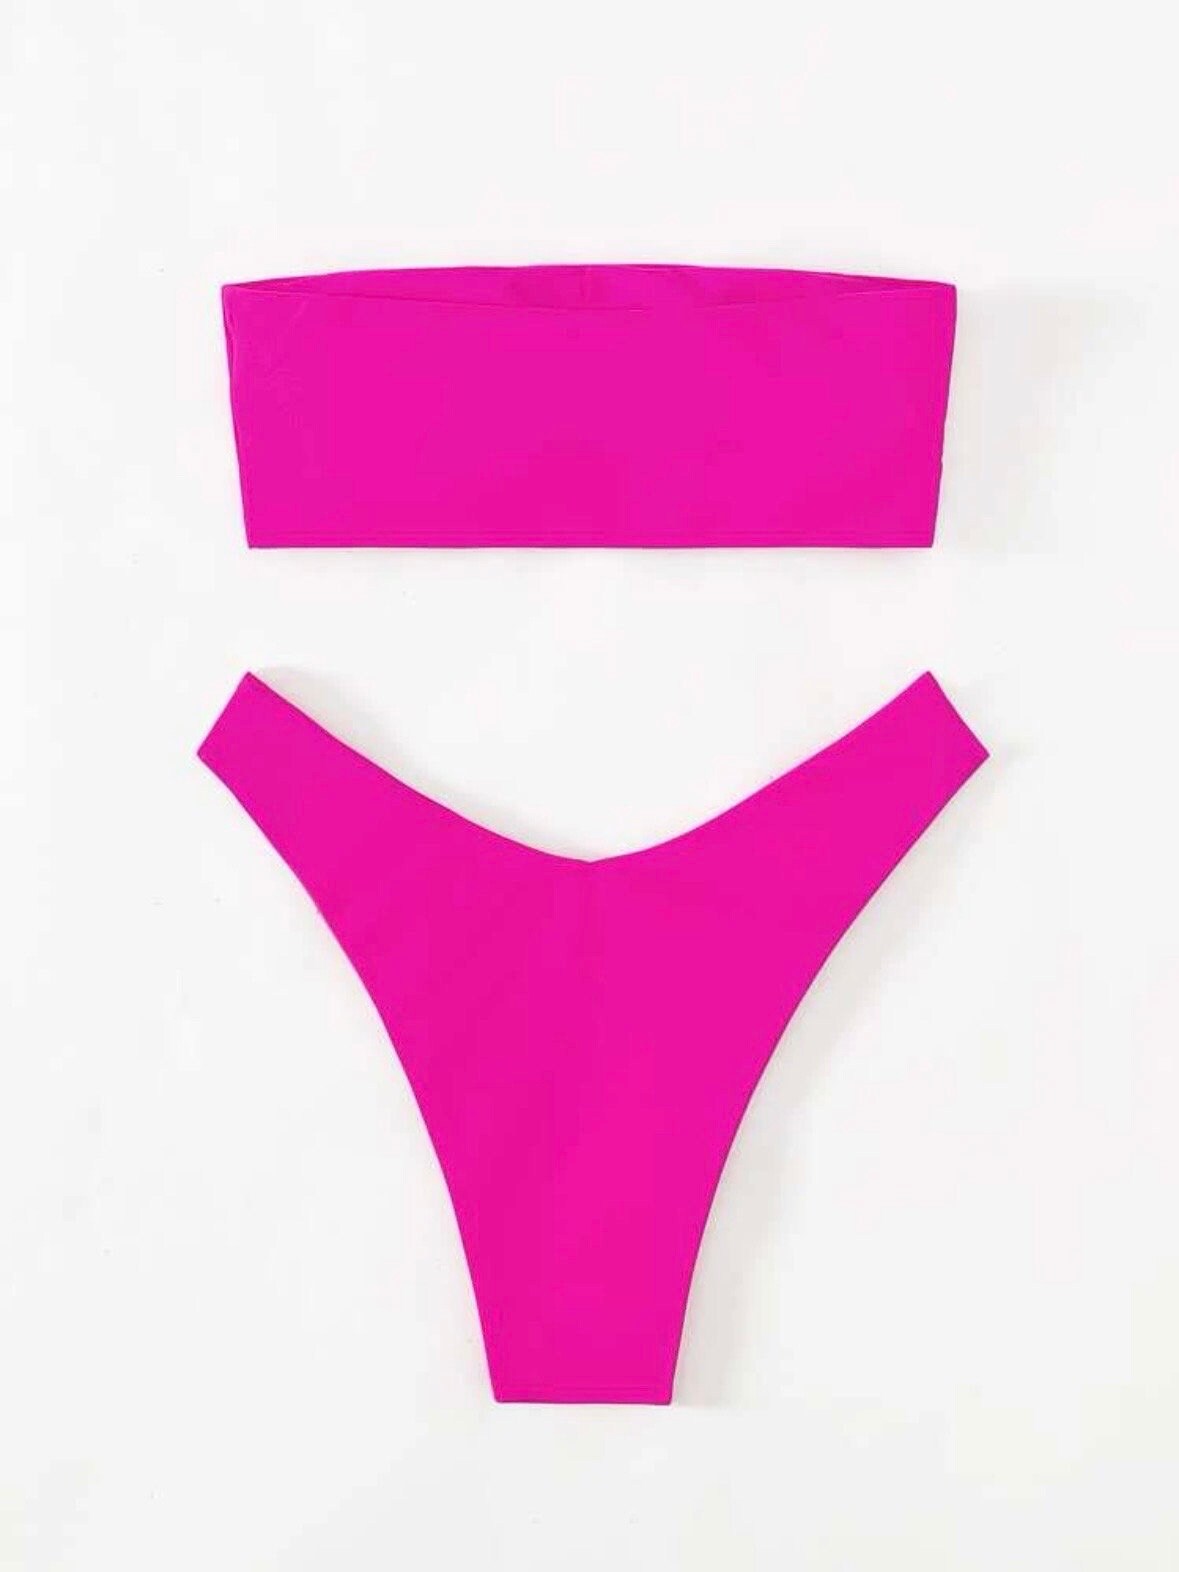 The Ally Solid Pink Sexy Swimwear Bikini Set Bandeau Top